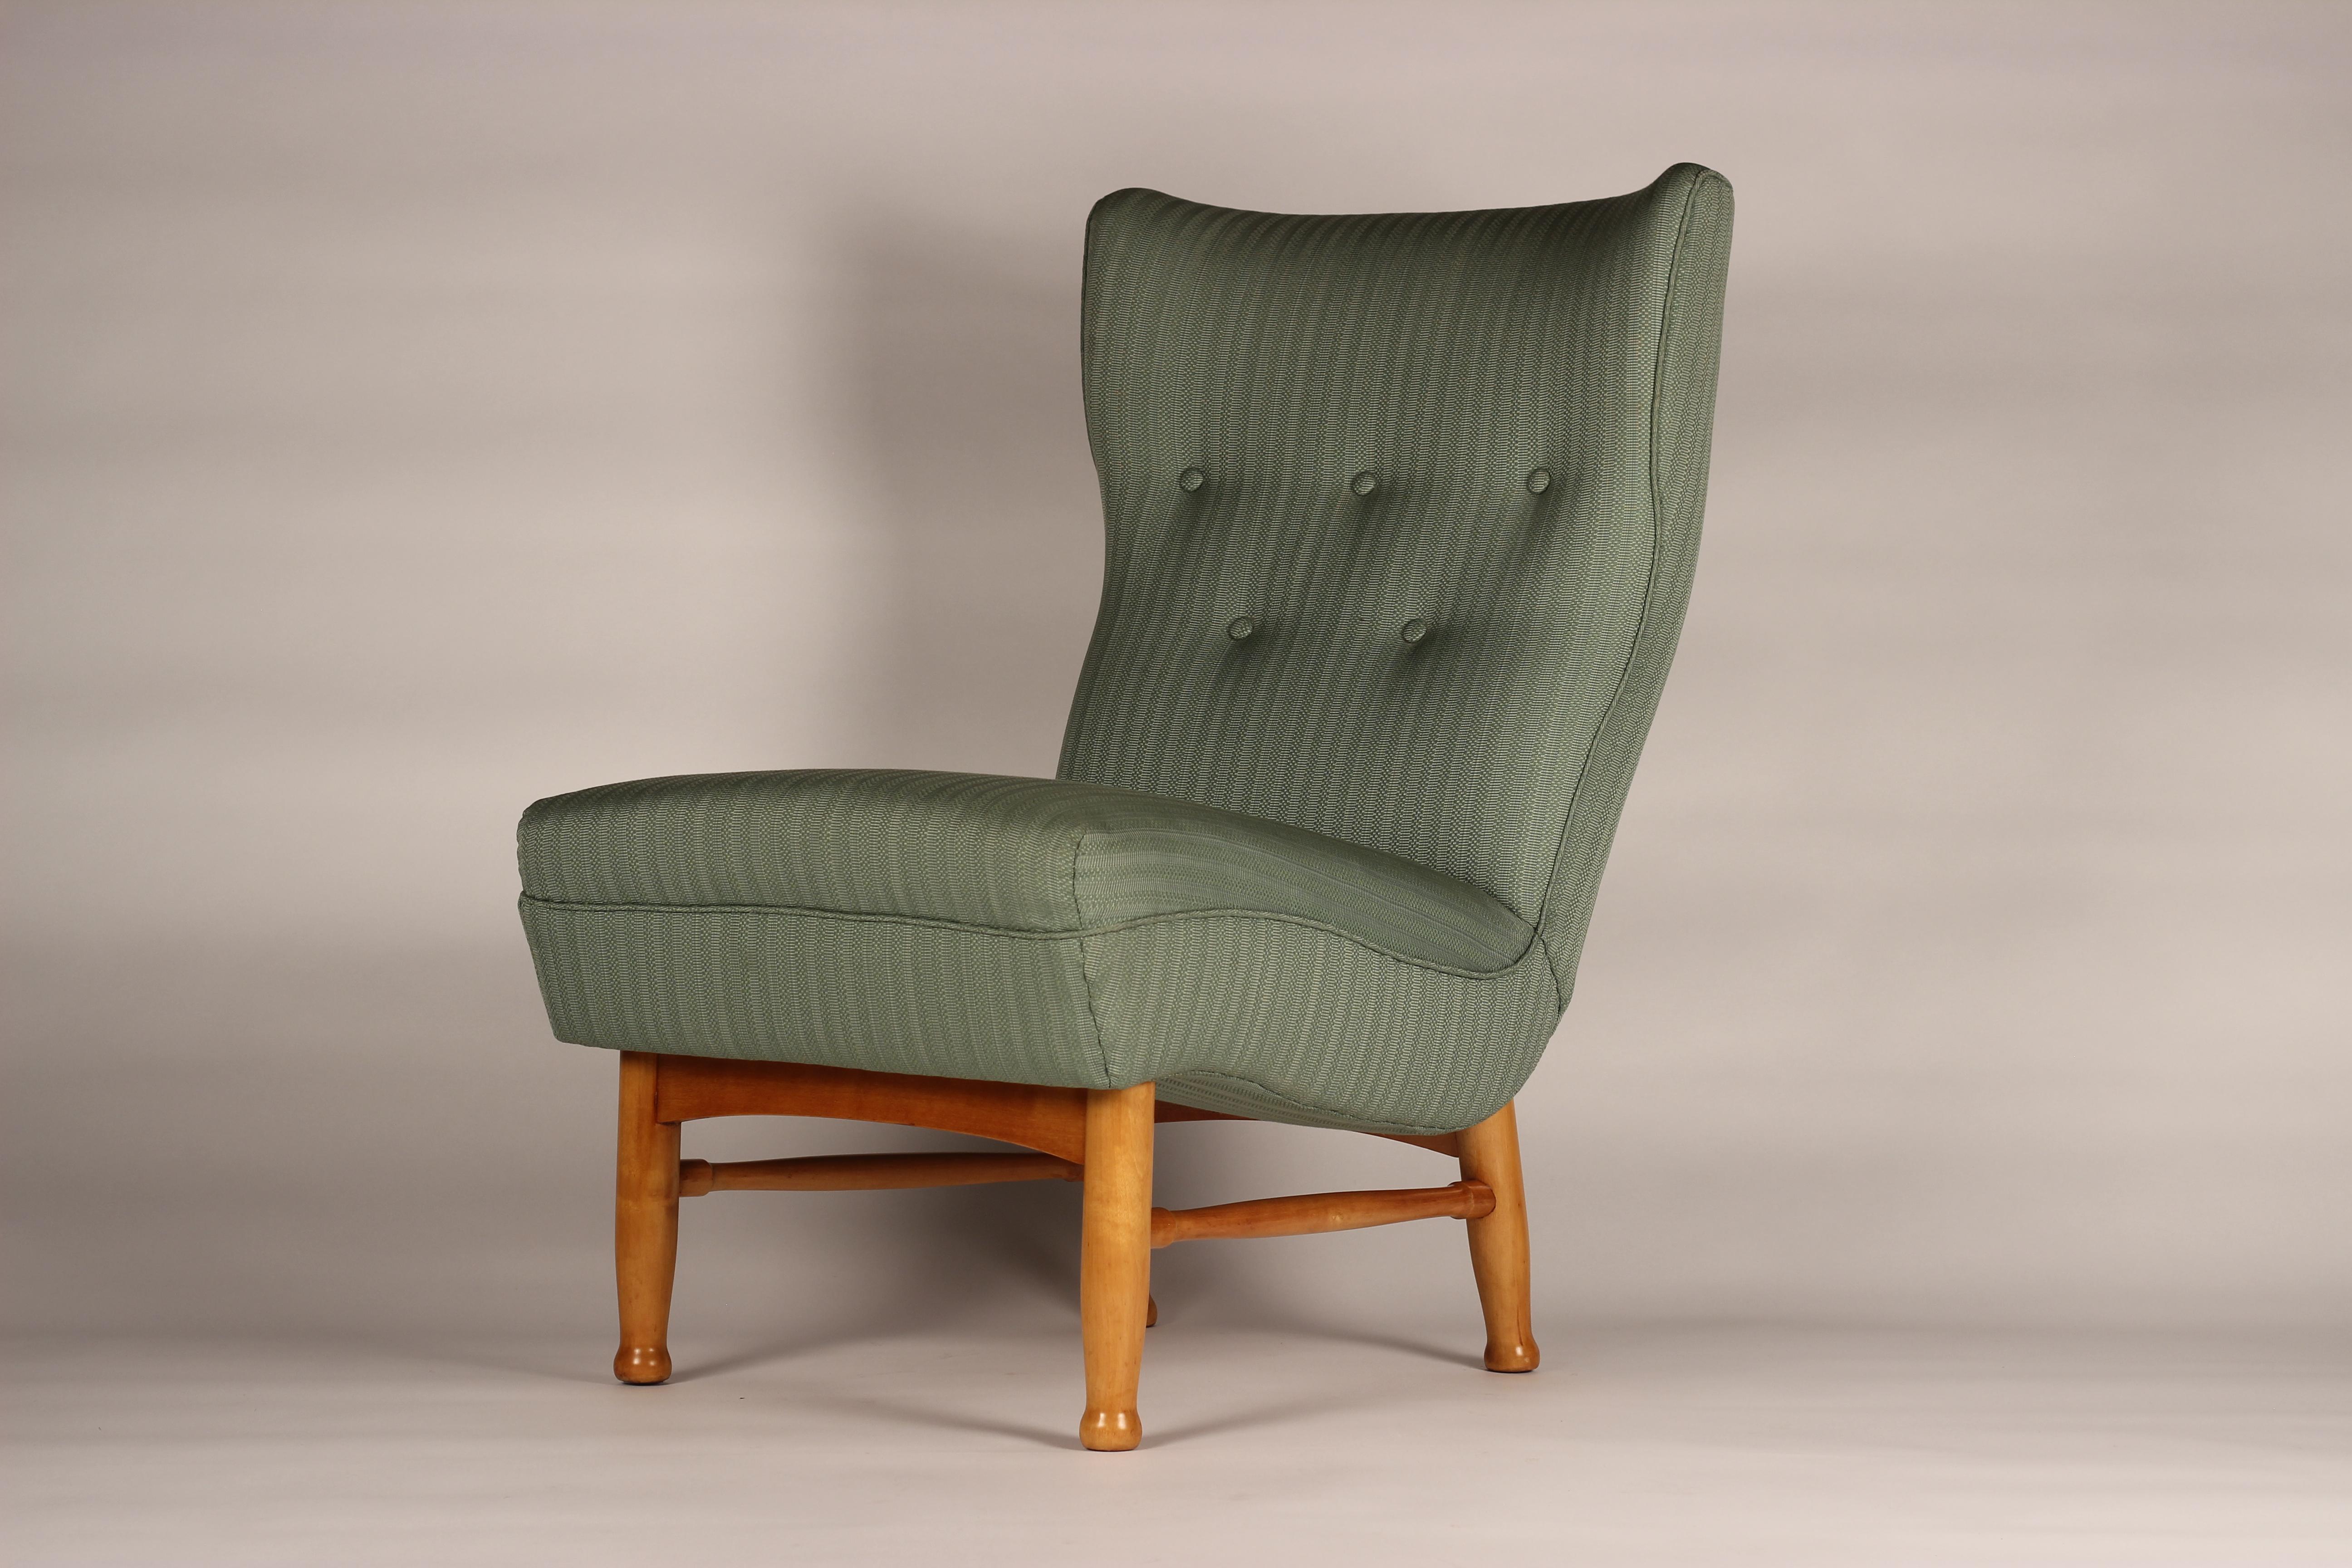 Scandinavian Modern Chair by Elias Svedberg for Nordiska Kompaniet Sweden 1950’s For Sale 4